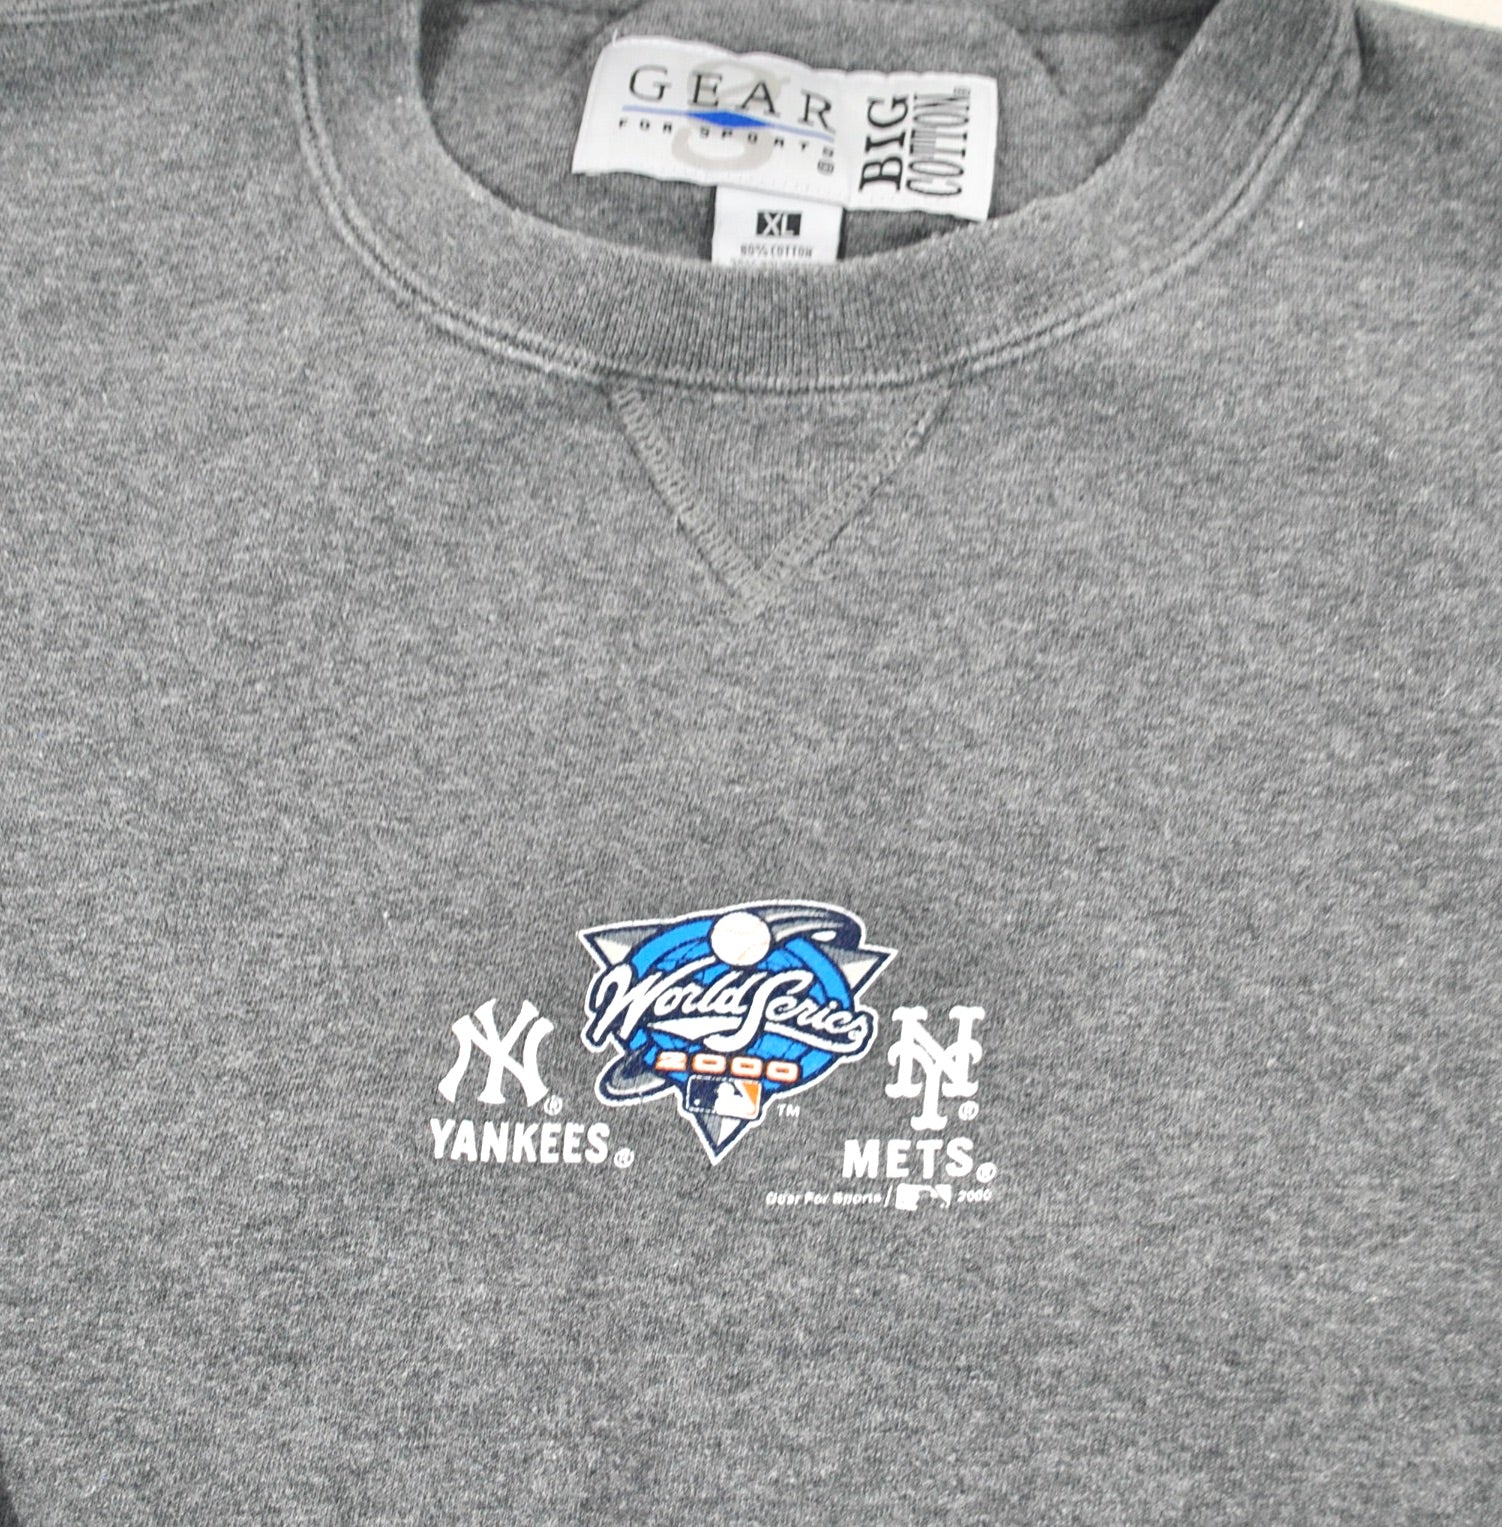 Vintage 2000 World Series T-Shirt